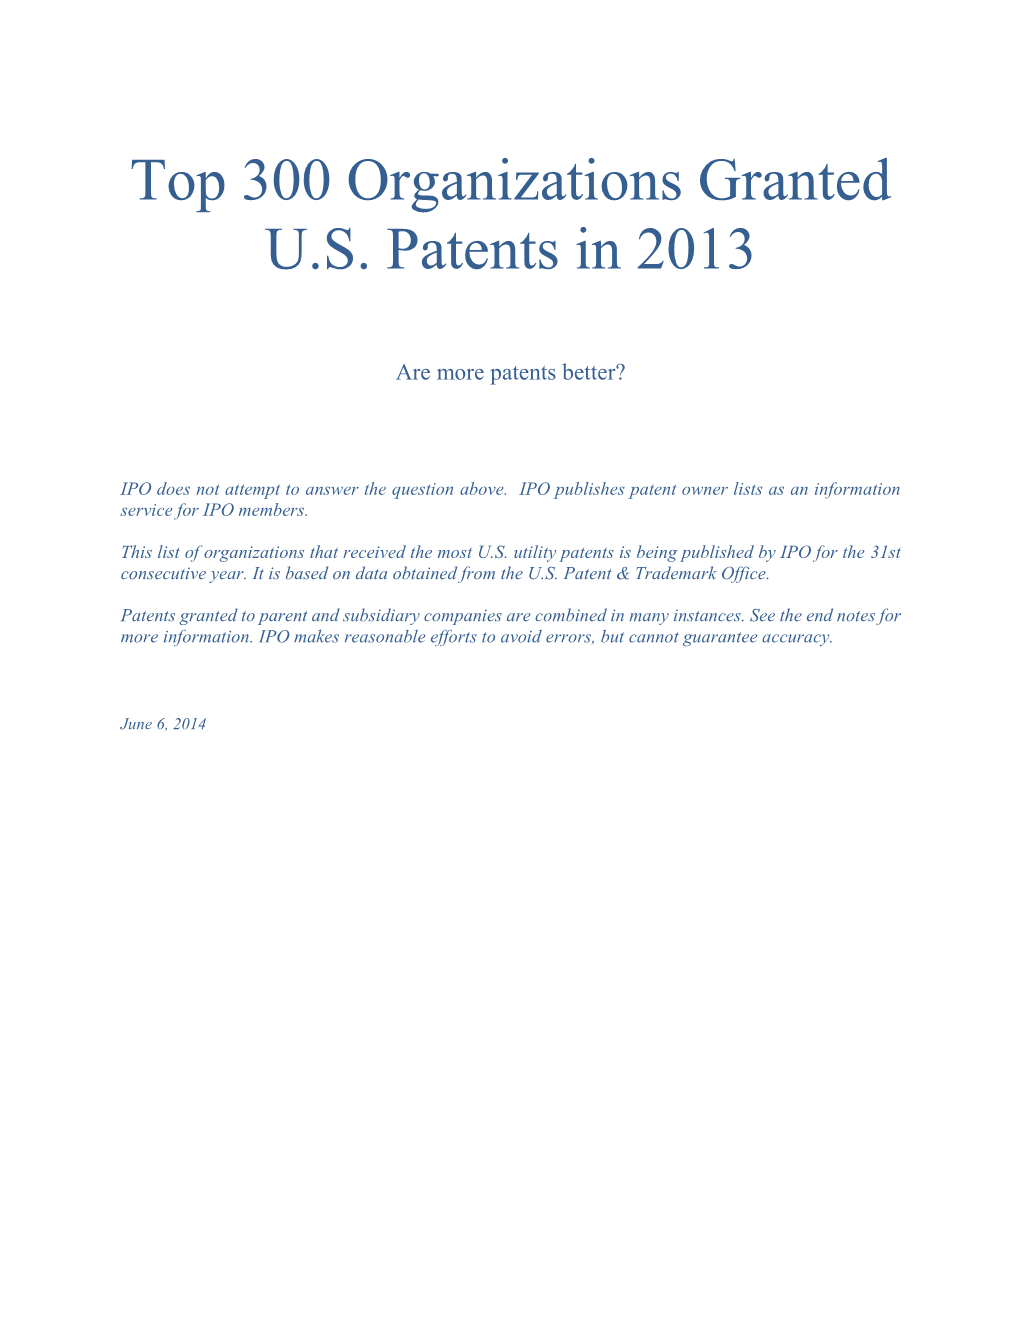 Top 300 Organizations Granted U.S. Patents in 2013